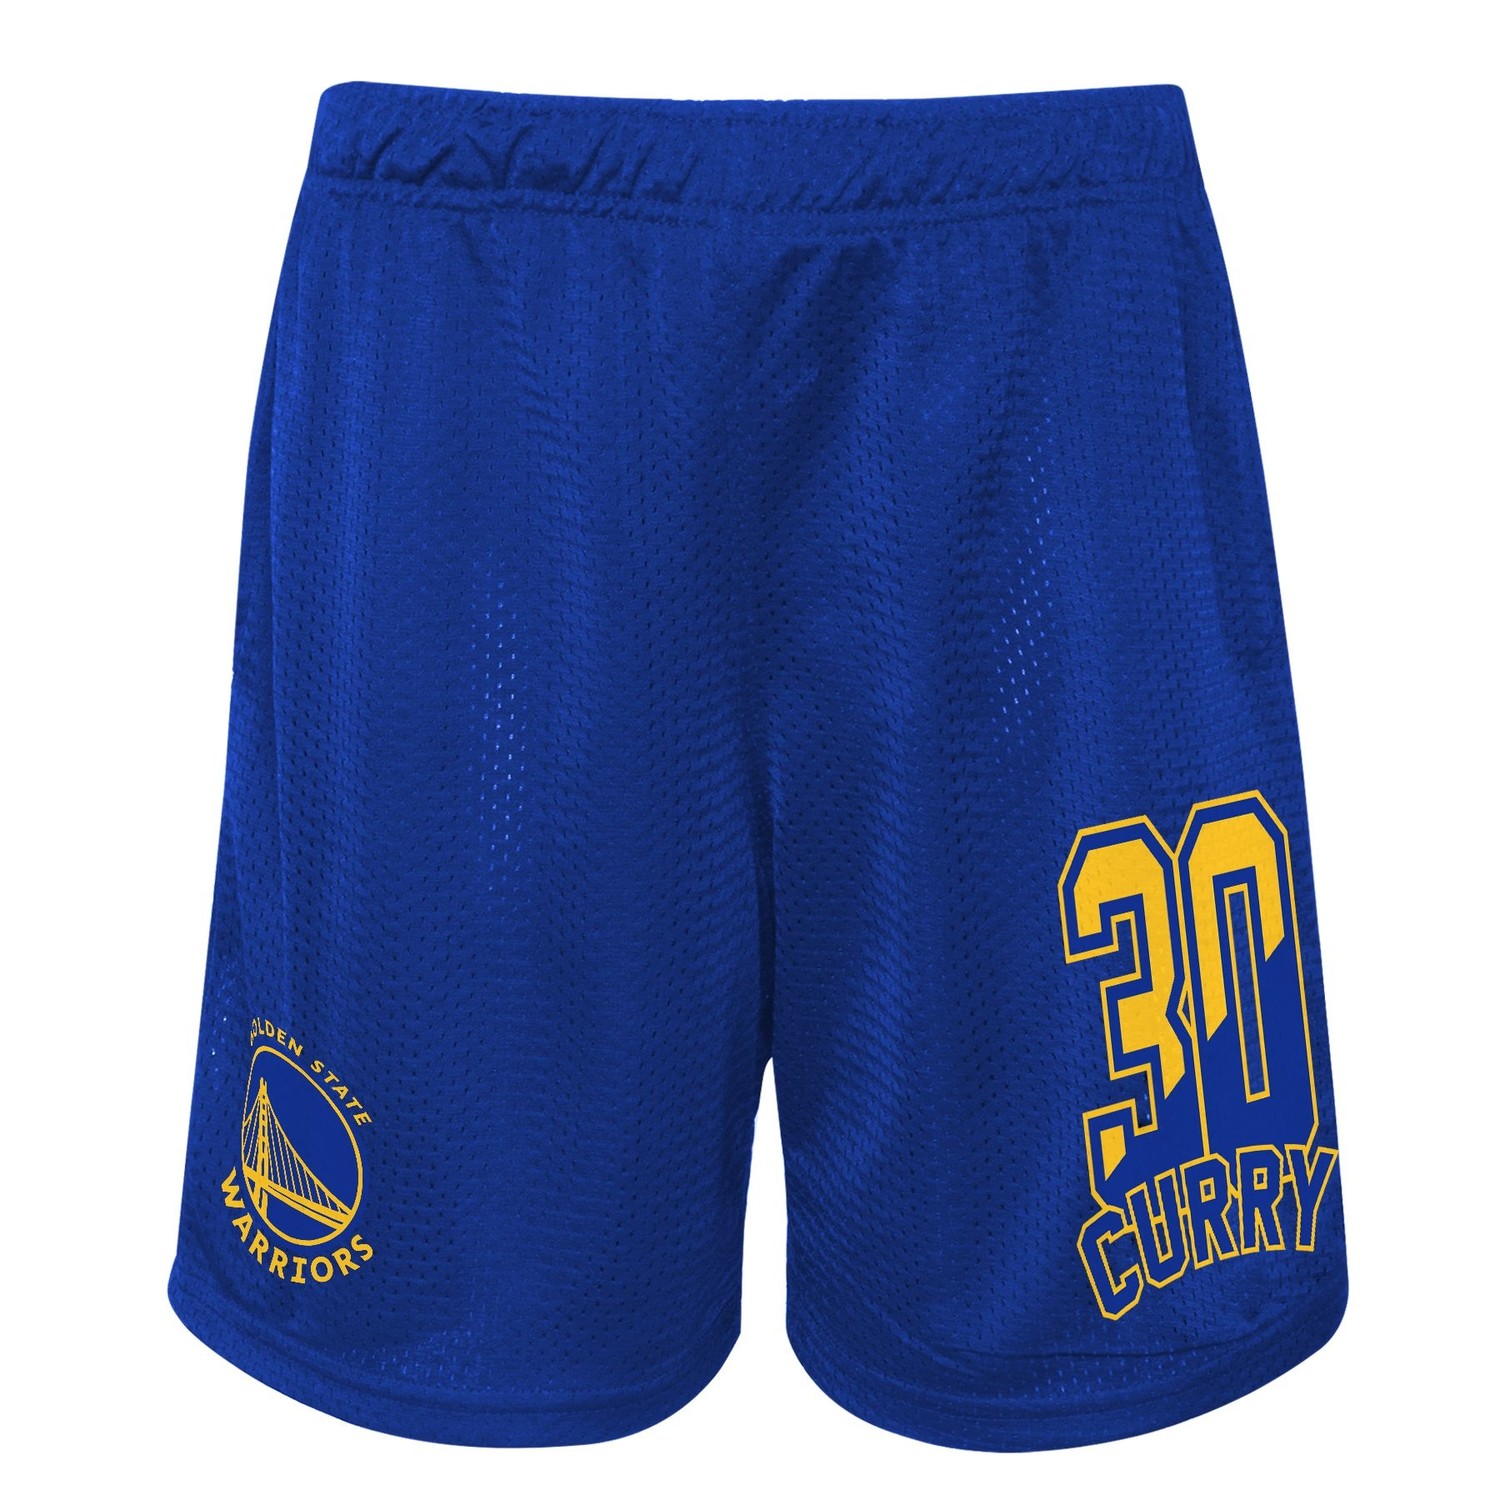 Outerstuff NBA Steph Curry Maillot Bleu (Logo Poitrine) - Burned